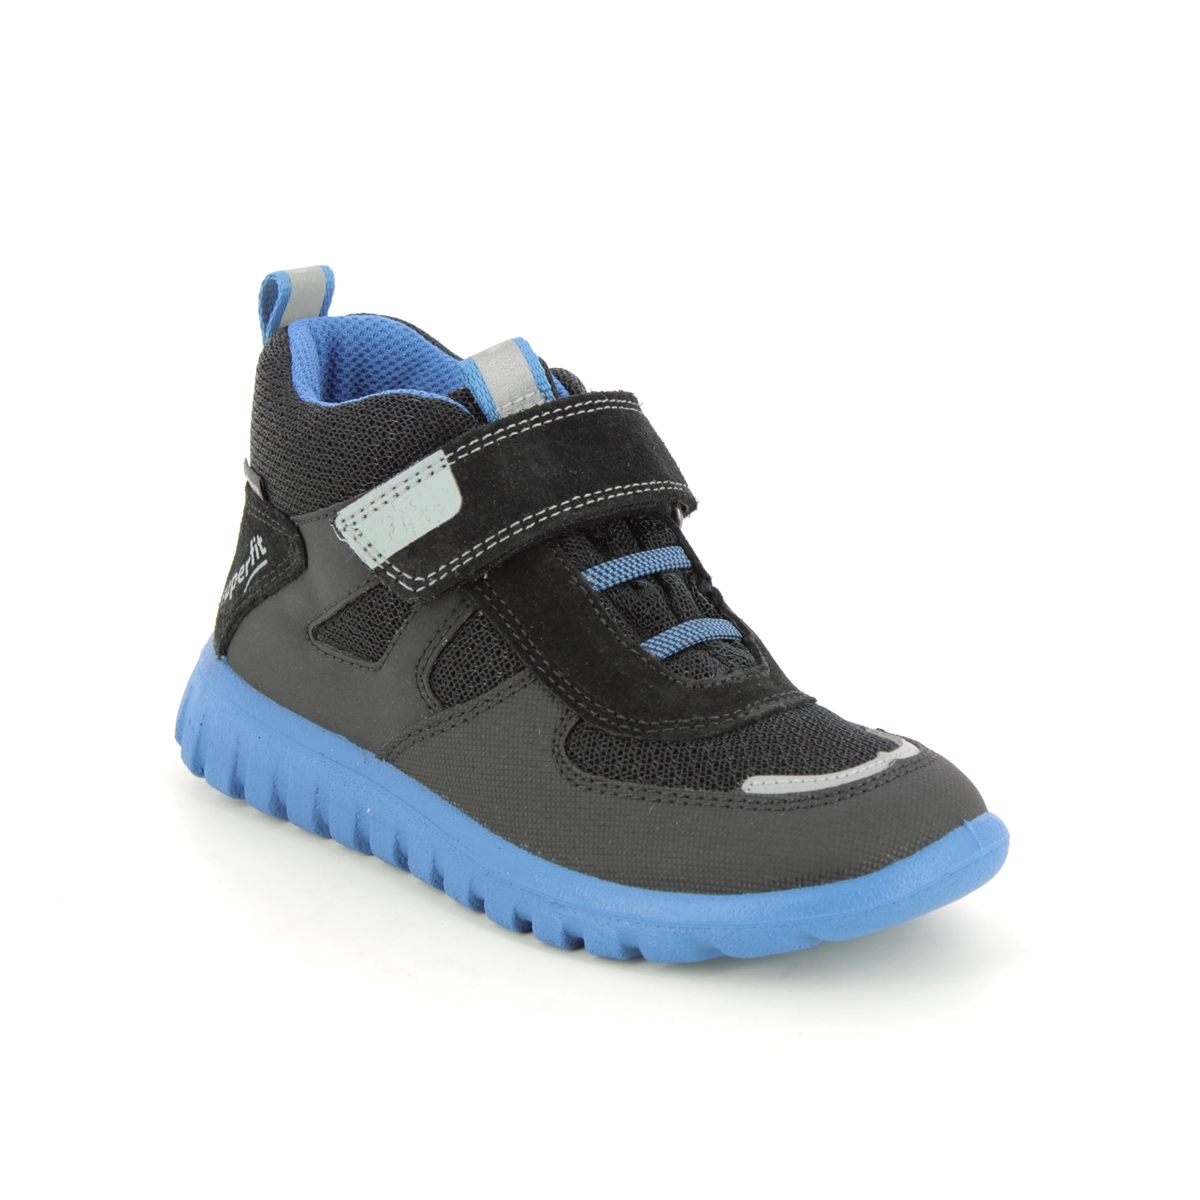 Superfit Sport7 Mini Gtx Black-blue Kids boys boots 1006196-0000 in a Plain Man-made in Size 24